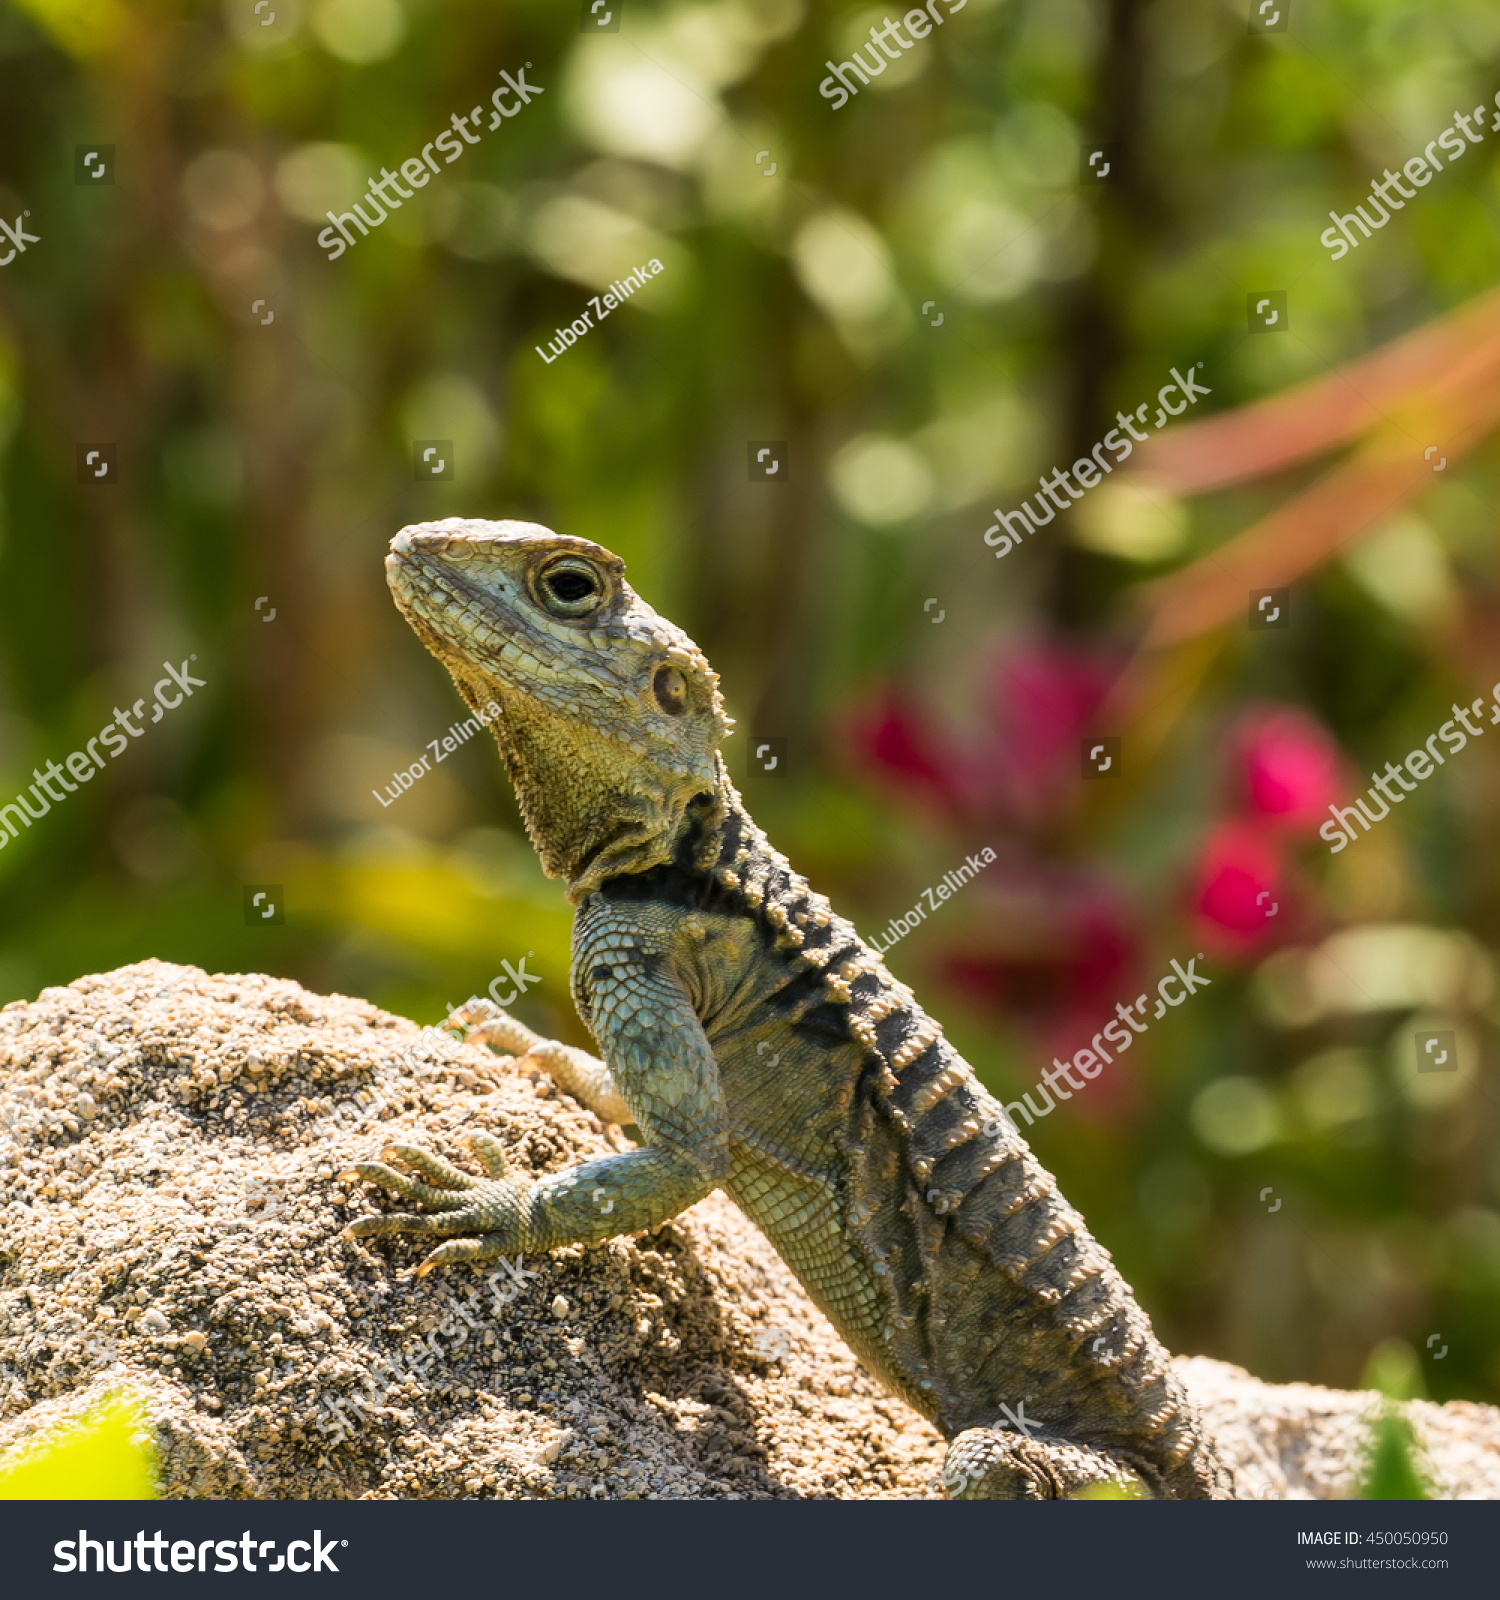 Wild Lizard On Rock Green Background Stock Photo (Royalty Free ...